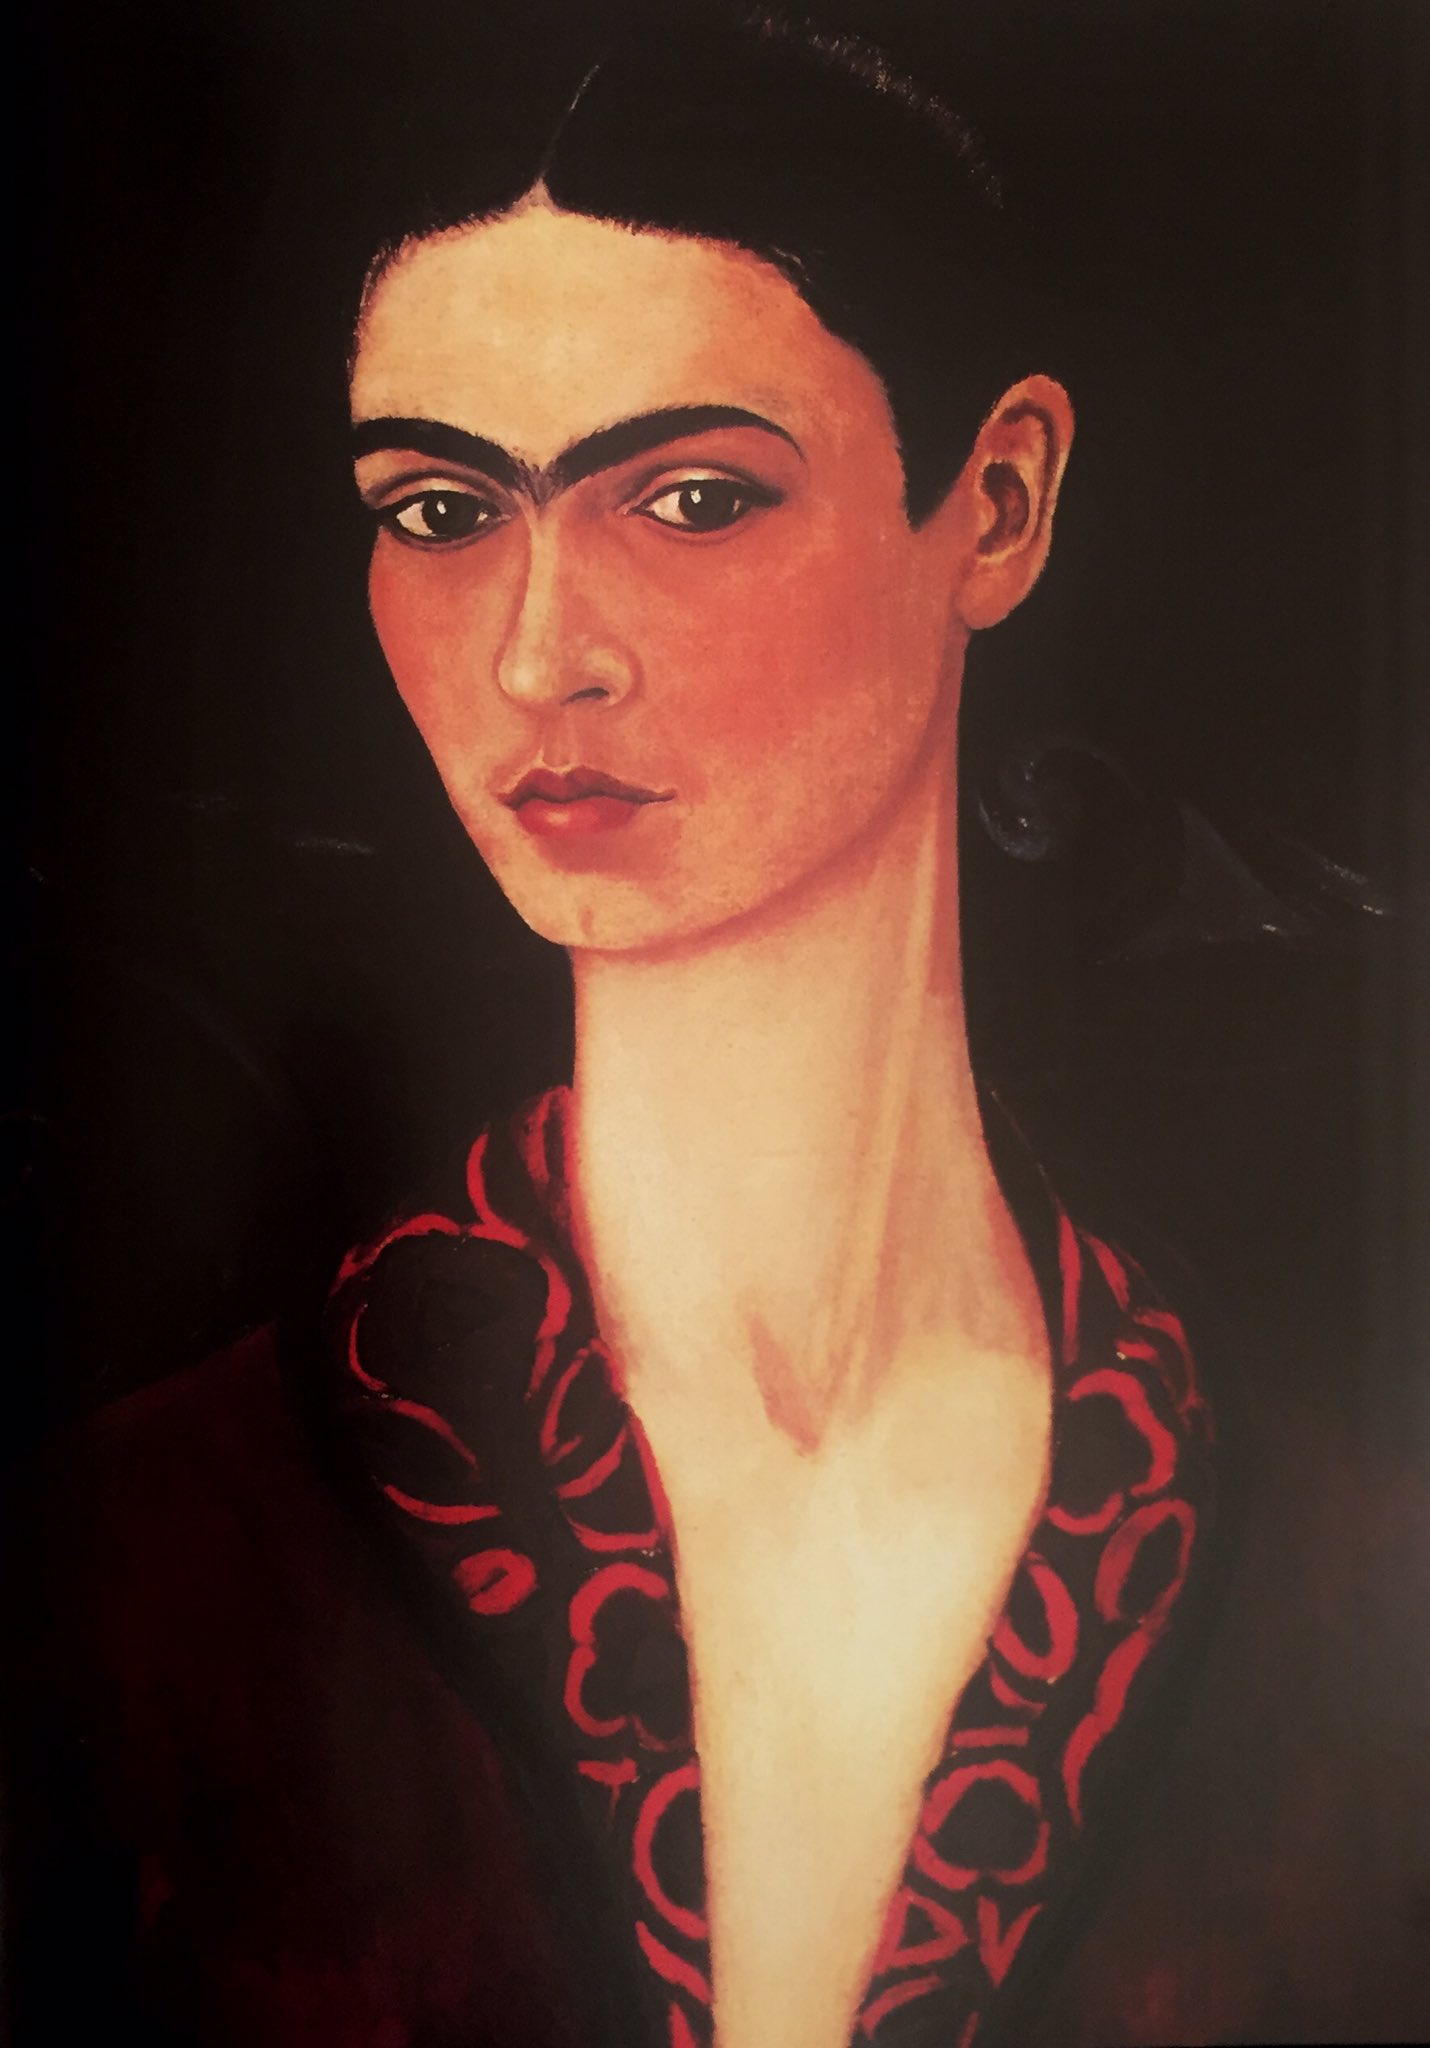 Frida Kahlo on Twitter: "Autorretrato con vestido de terciopelo (detalle).  - 1926 - #FridaKahlo #BuenViernes https://t.co/ZQDmFXLRVa" / Twitter